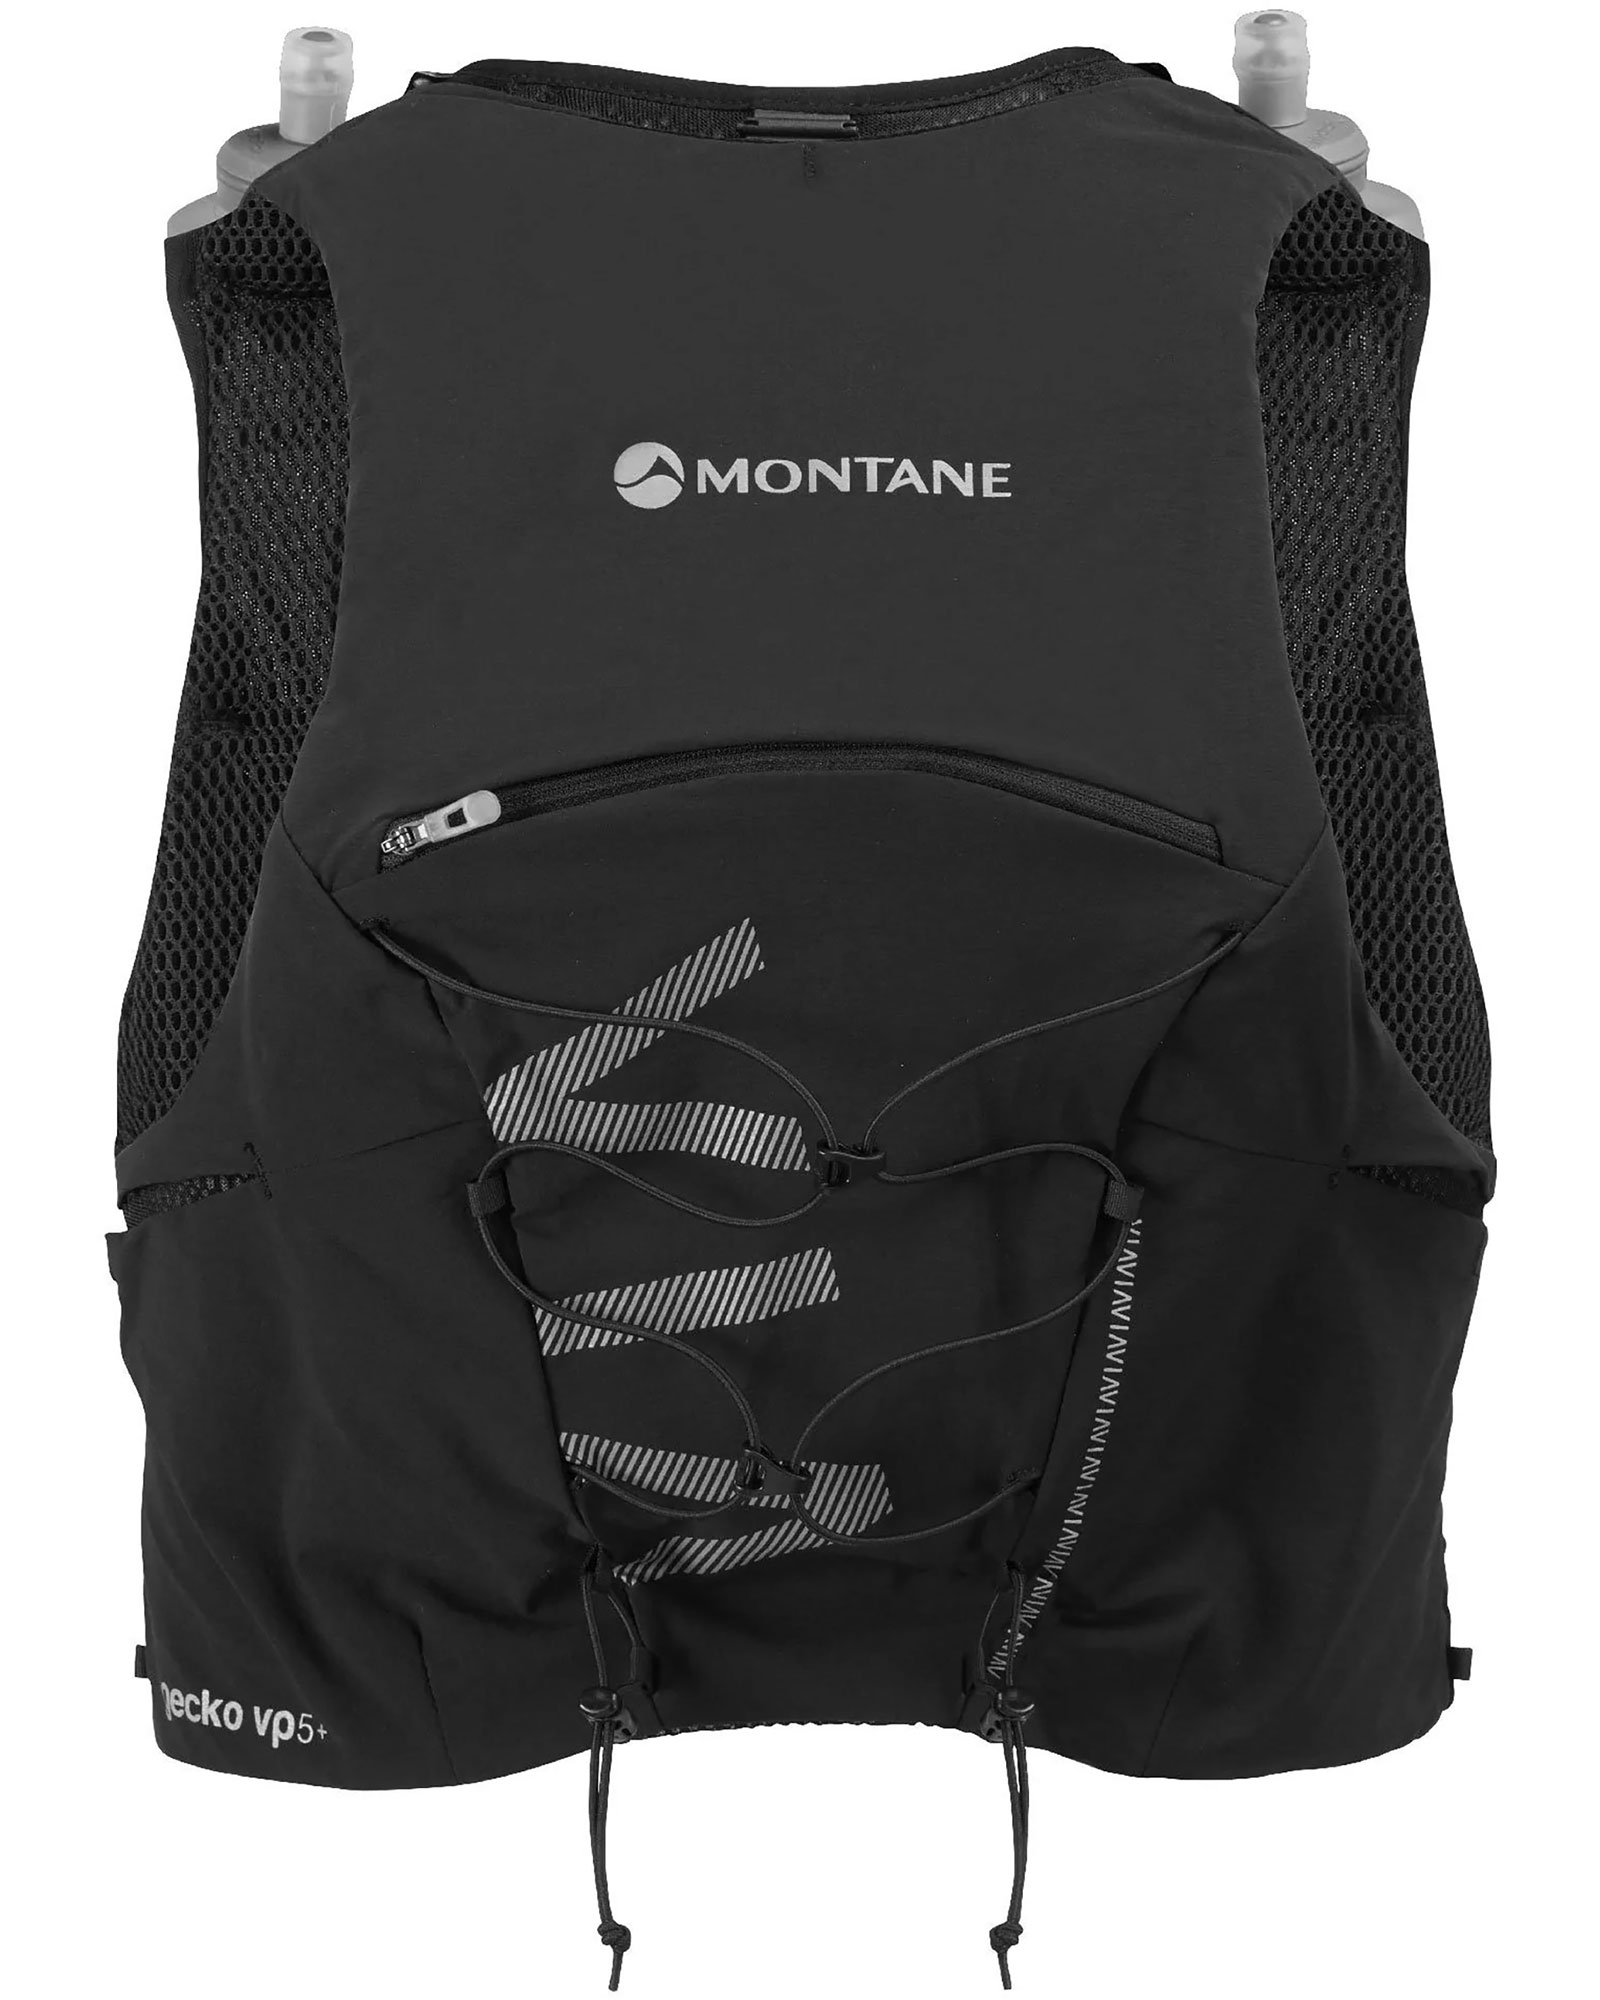 Montane Gecko Vest Pack 5+